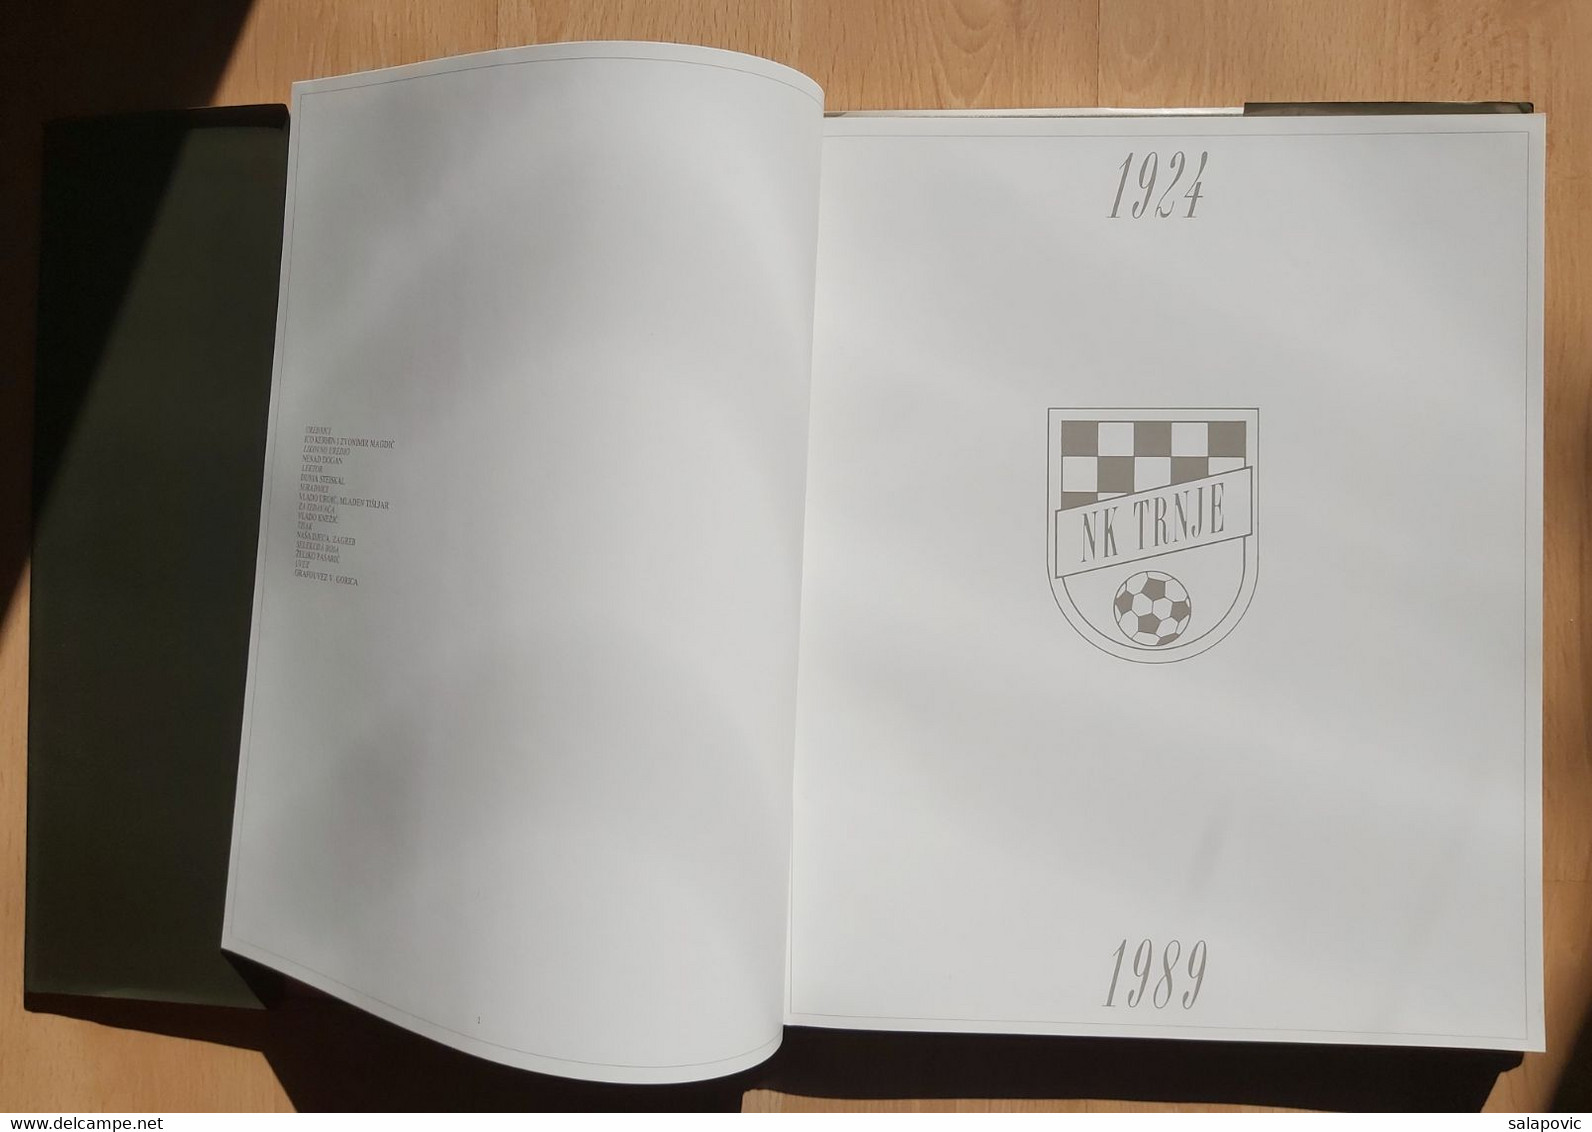 NK Trnje 1924-1989 Football Club, Croatia - Livres